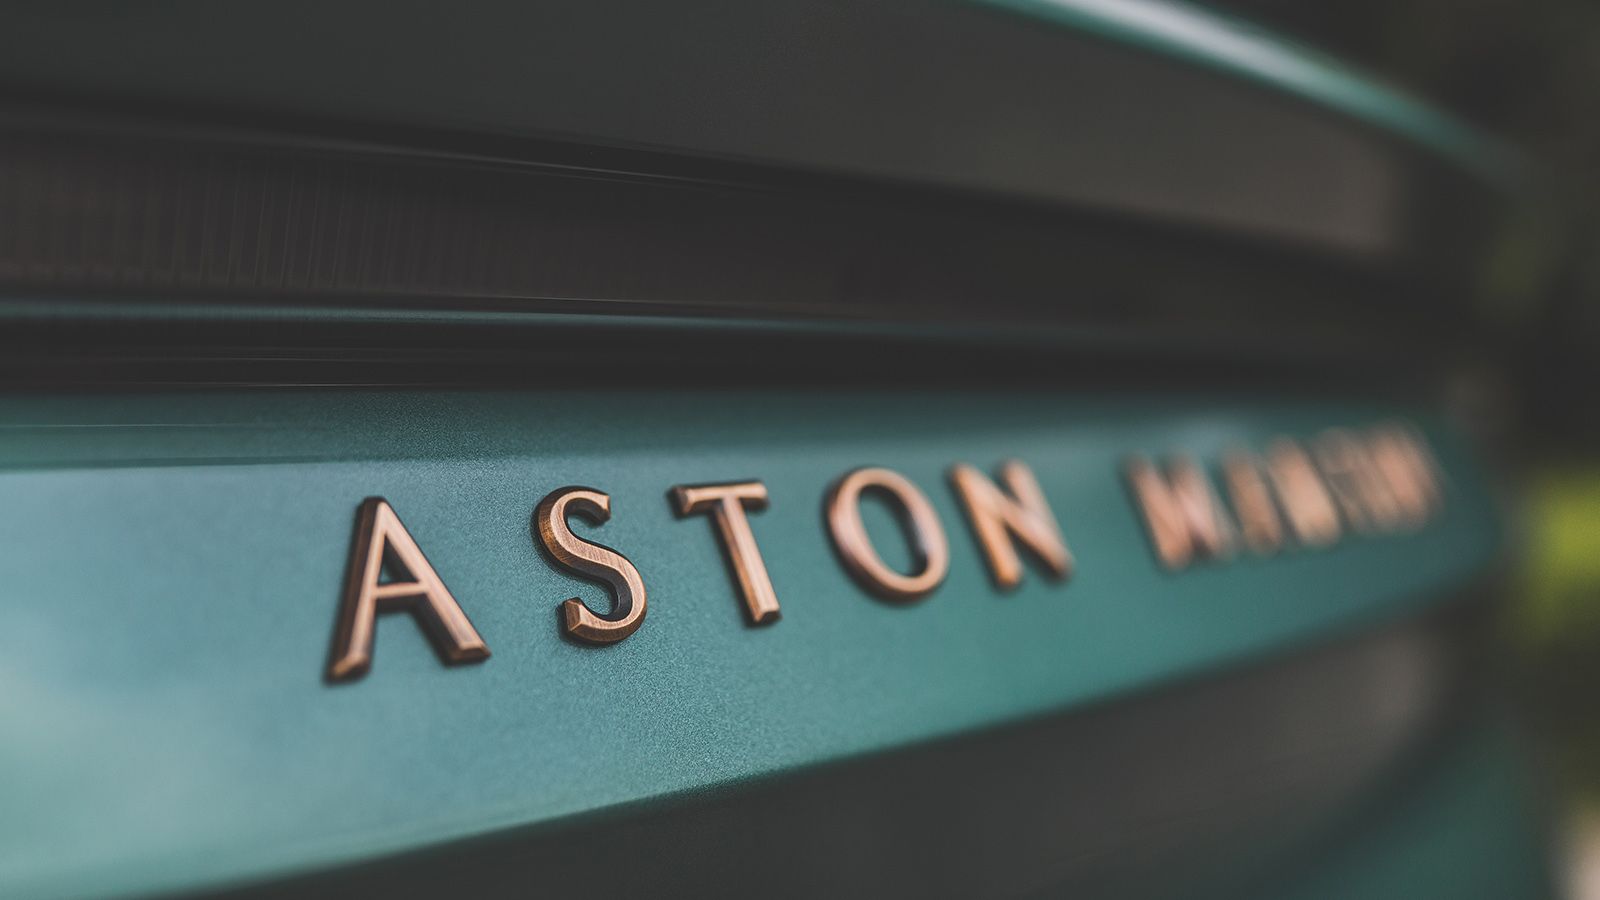 Aston Martin Dbs 59 Wallpapers